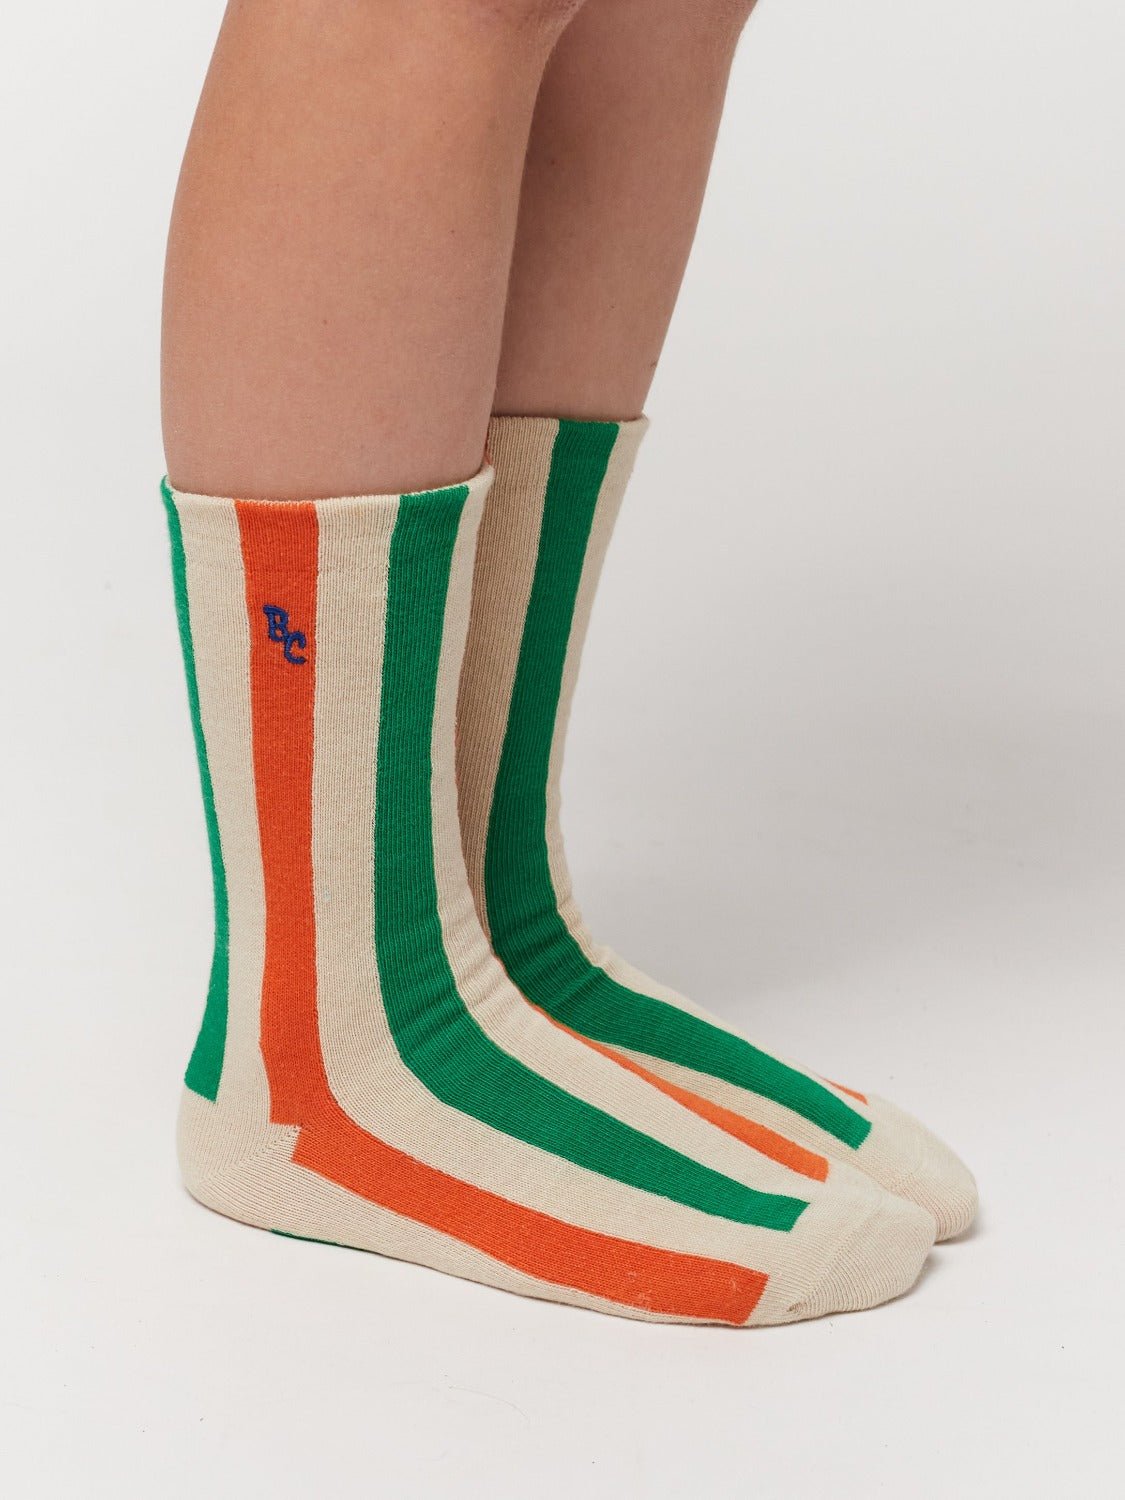 Vertical Stripes Long Socks by Bobo Choses - Petite Belle